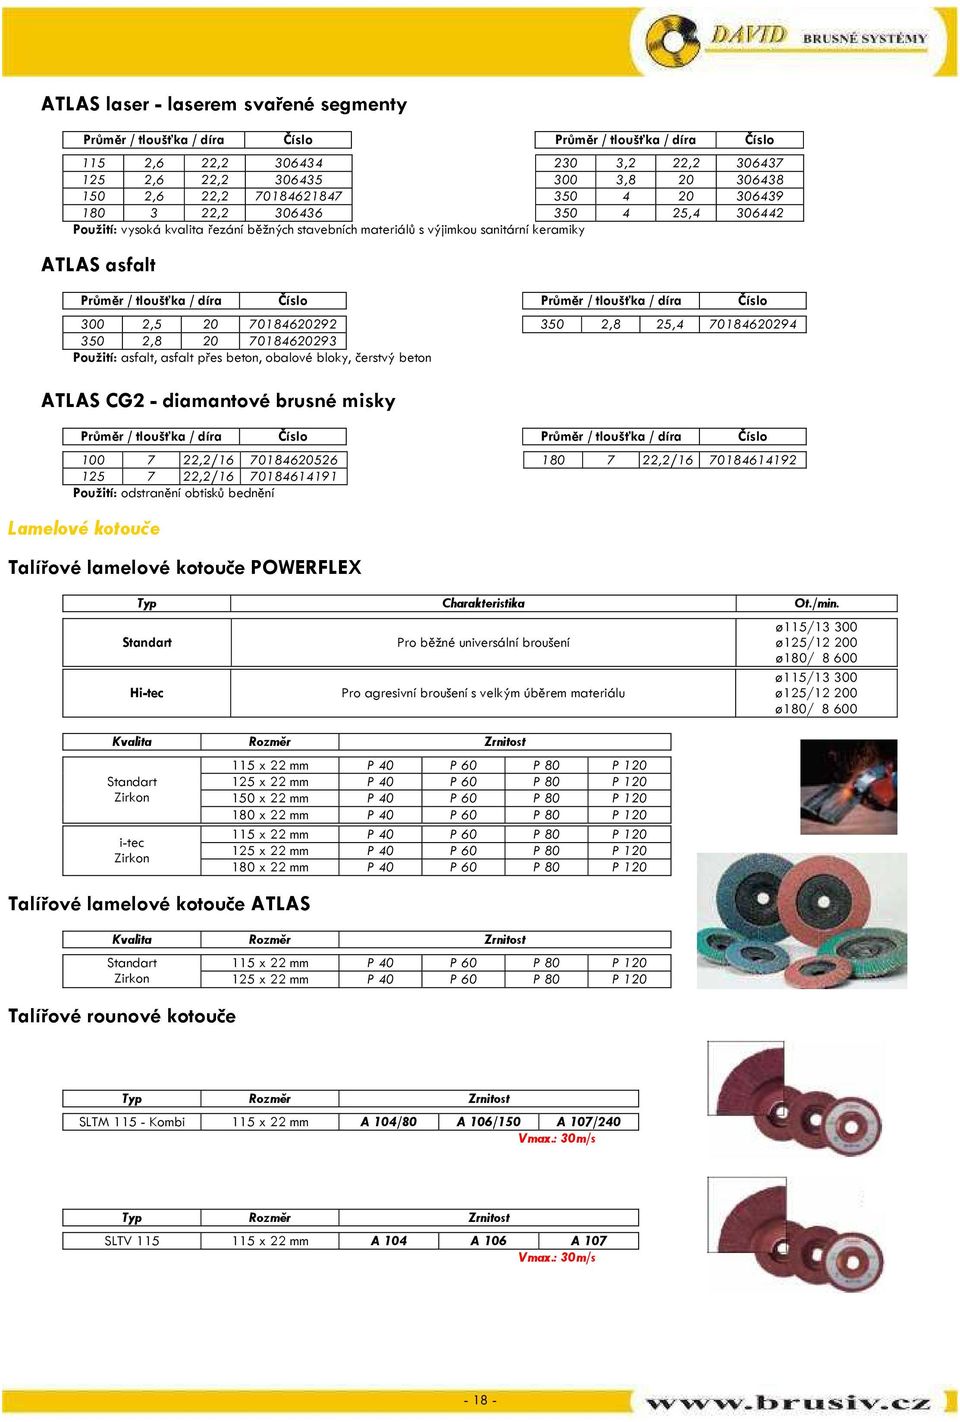 keramiky ATLAS asfalt Průměr / tloušťka / díra Číslo Cena Průměr / tloušťka / díra Číslo Cena 300 2,5 20 70184620292 2178,- 350 2,8 25,4 70184620294 2815,- 350 2,8 20 70184620293 2815,- Použití: